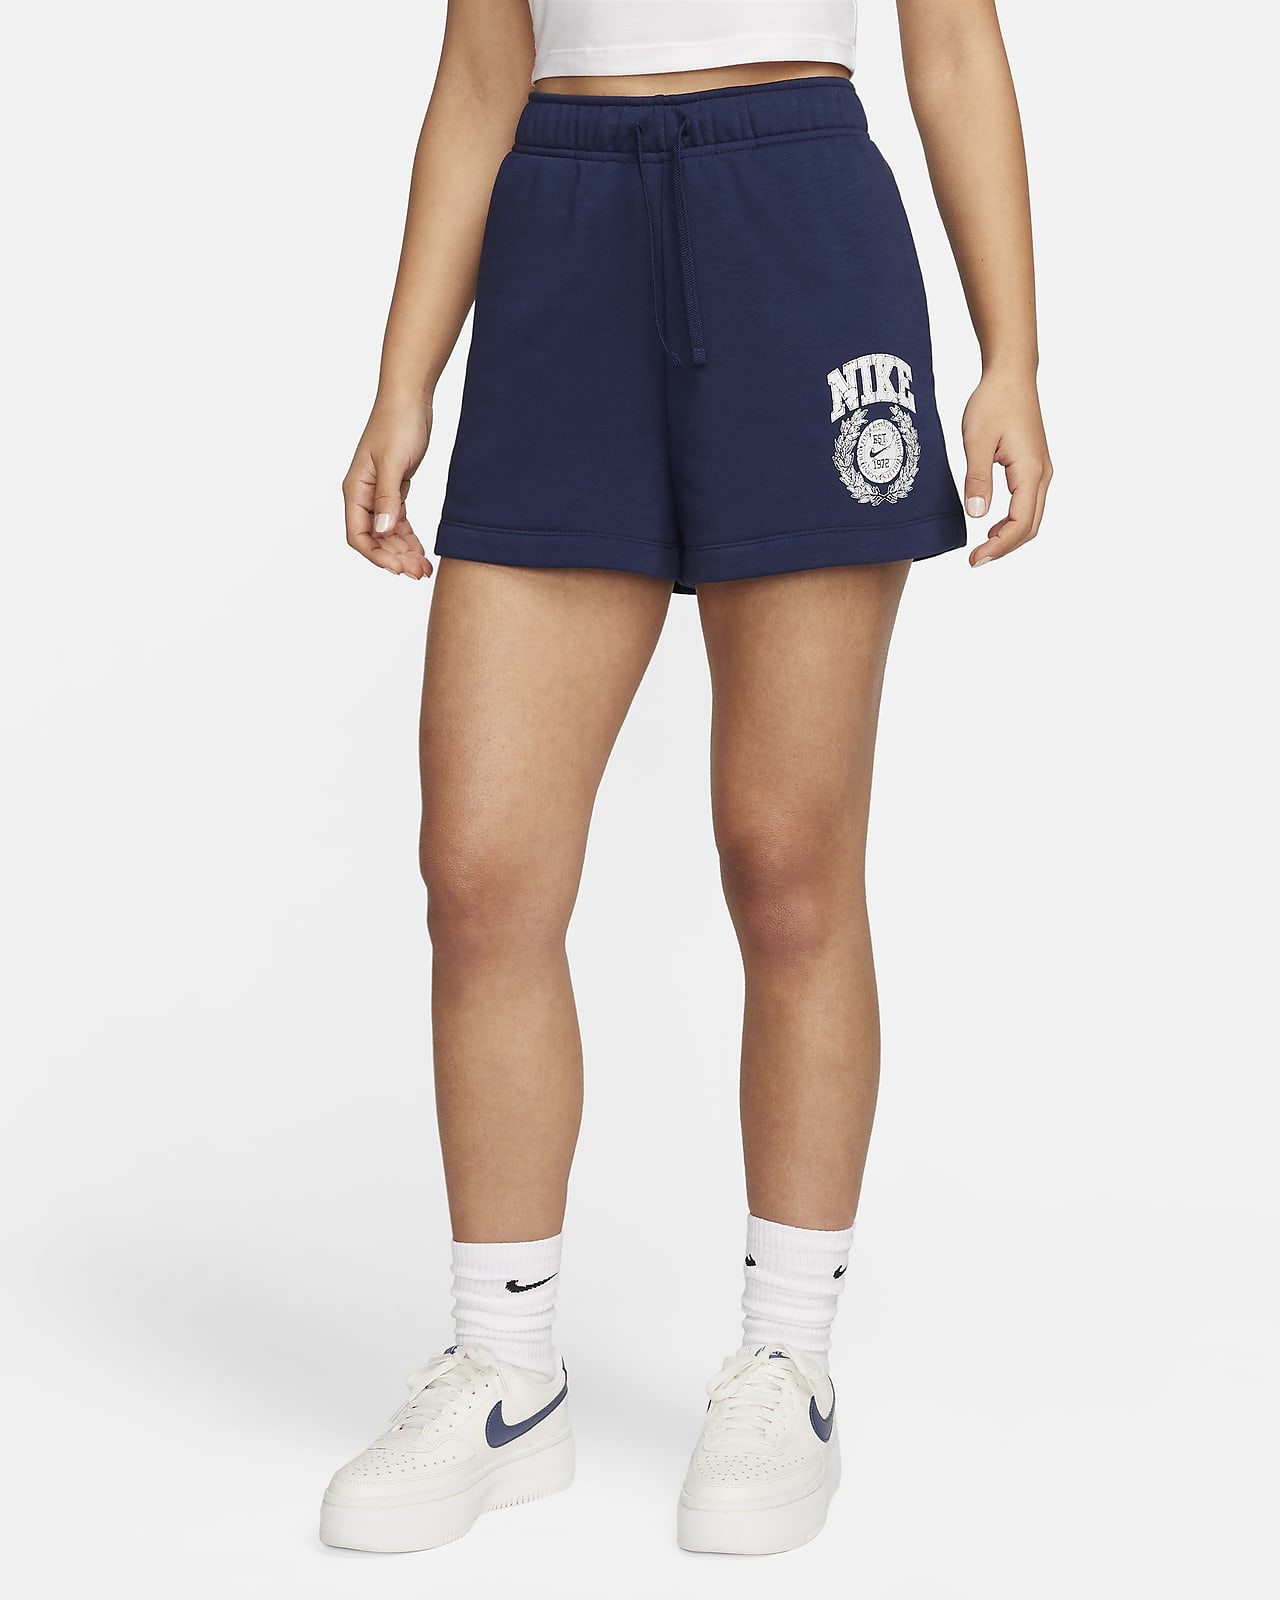 Mid-Rise Shorts. Club Nike Sportswear Women\'s Graphic Fleece